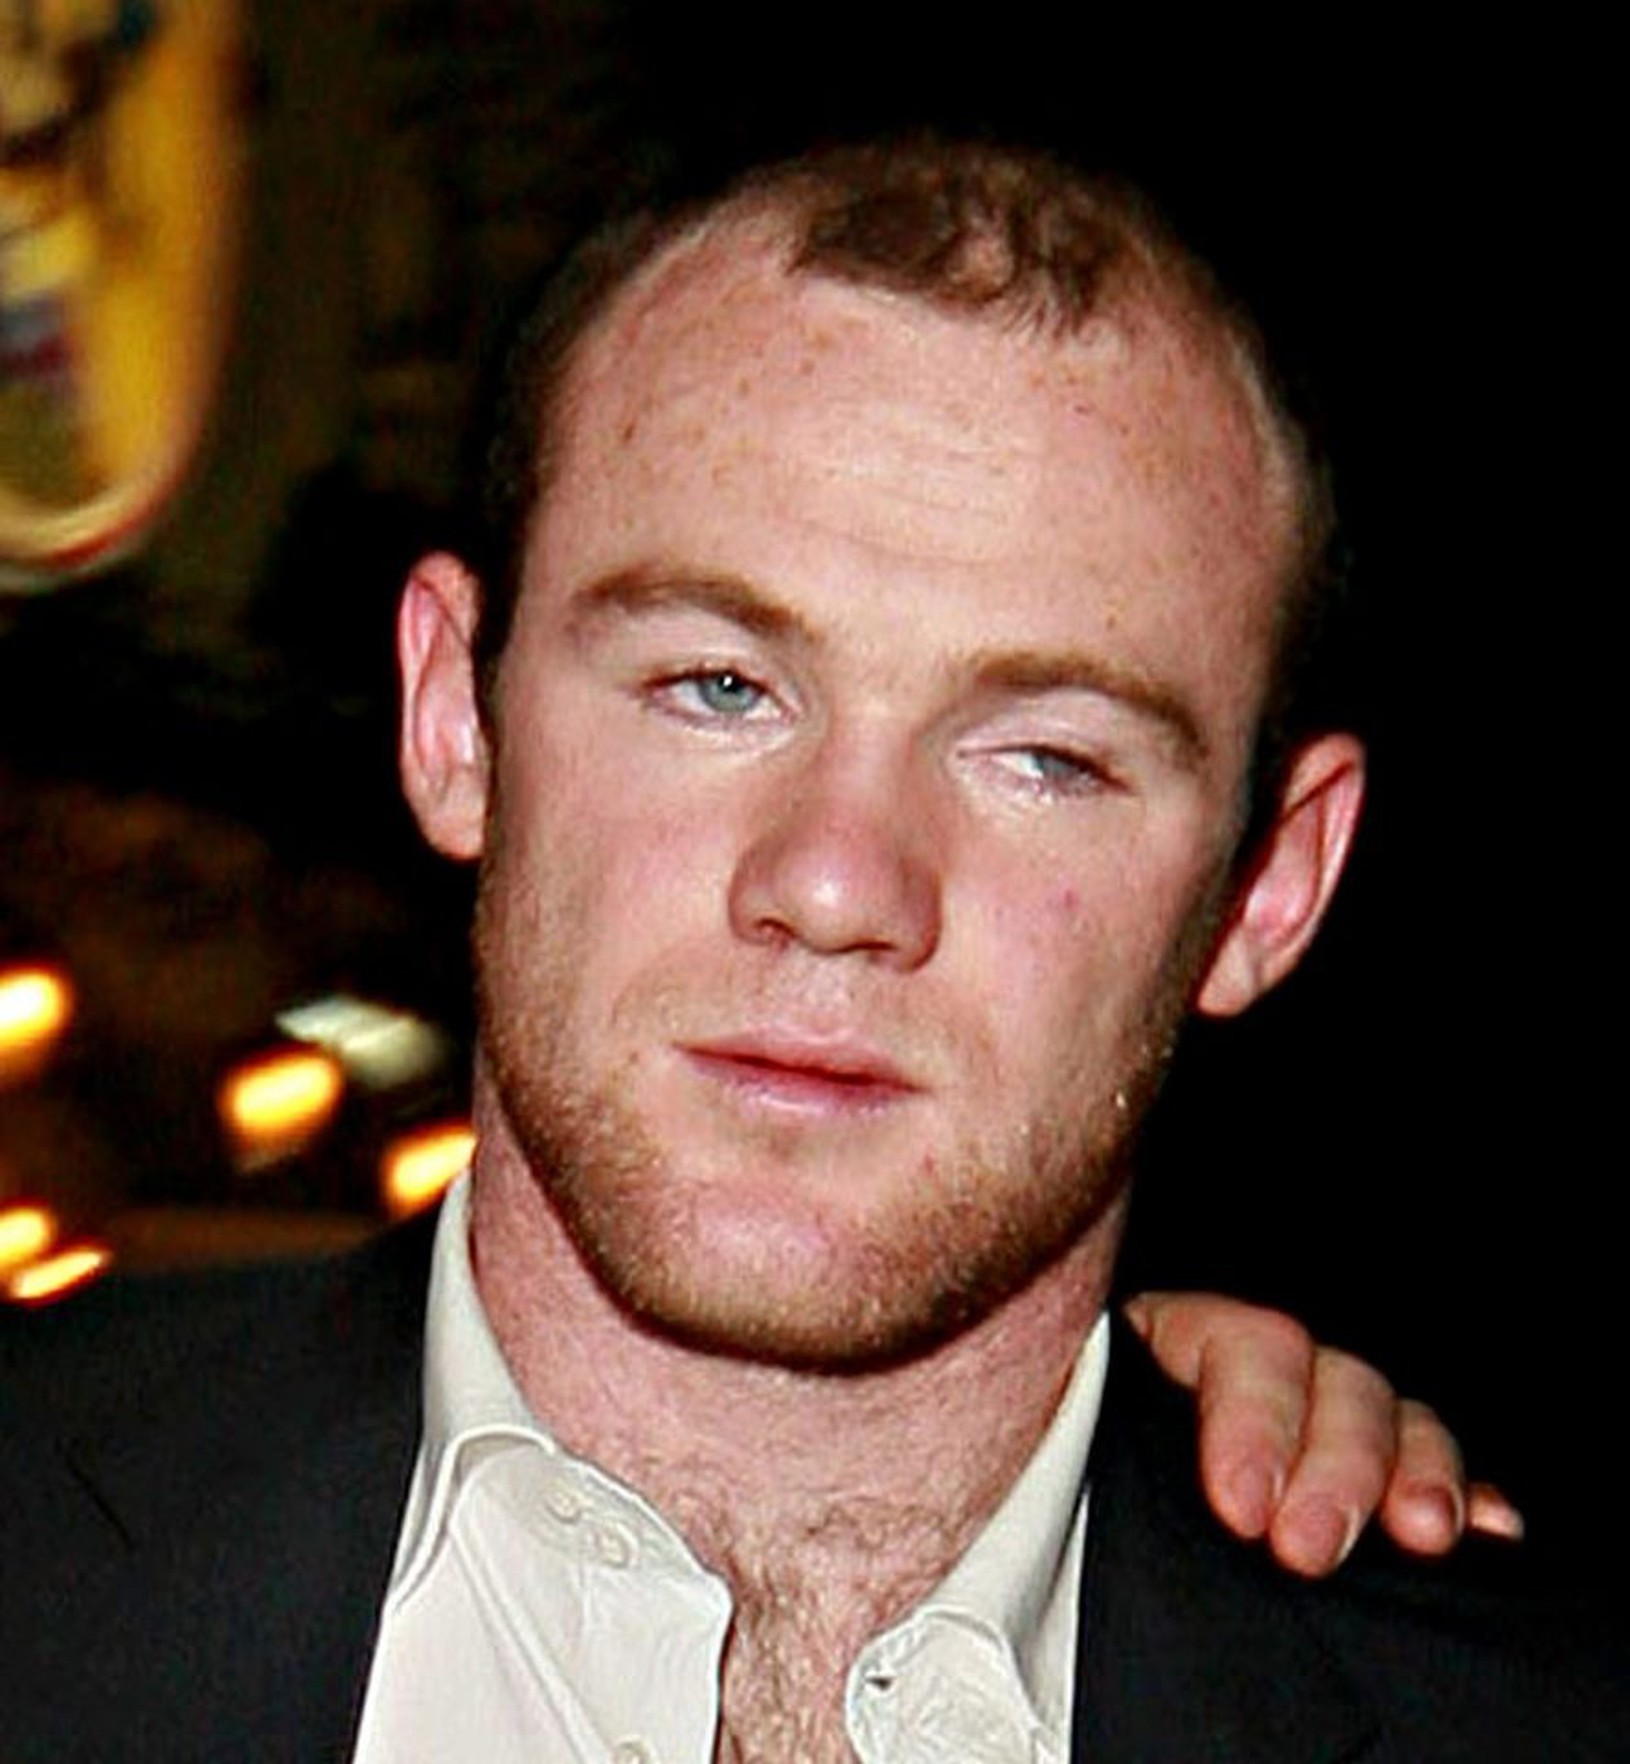 Wayne Rooney to prehnal